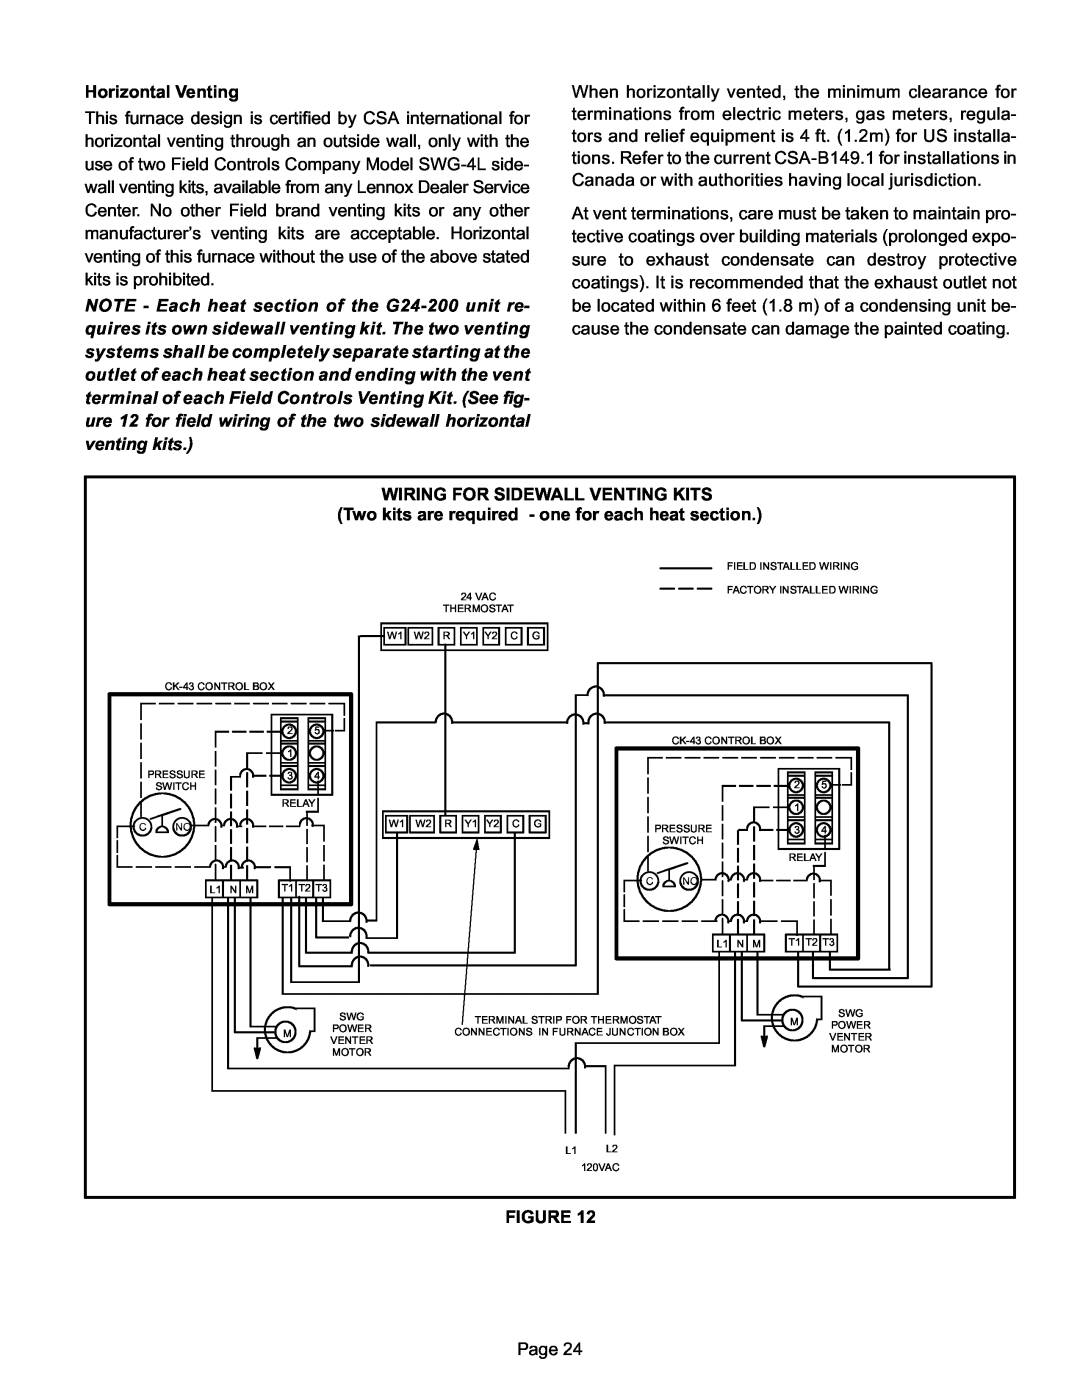 Lennox International Inc G24-200 installation instructions Horizontal Venting 